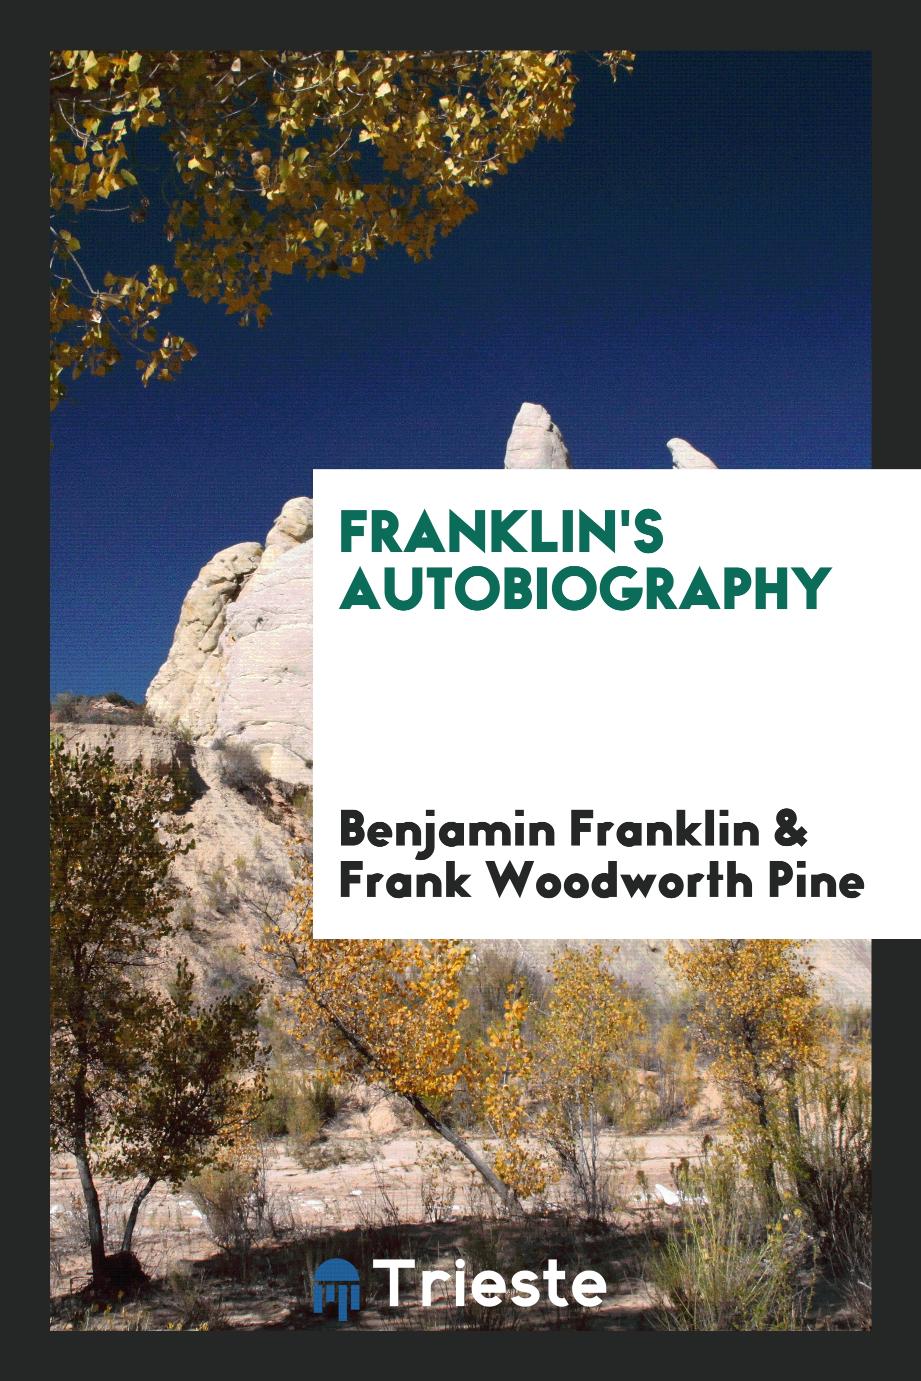 Franklin's autobiography